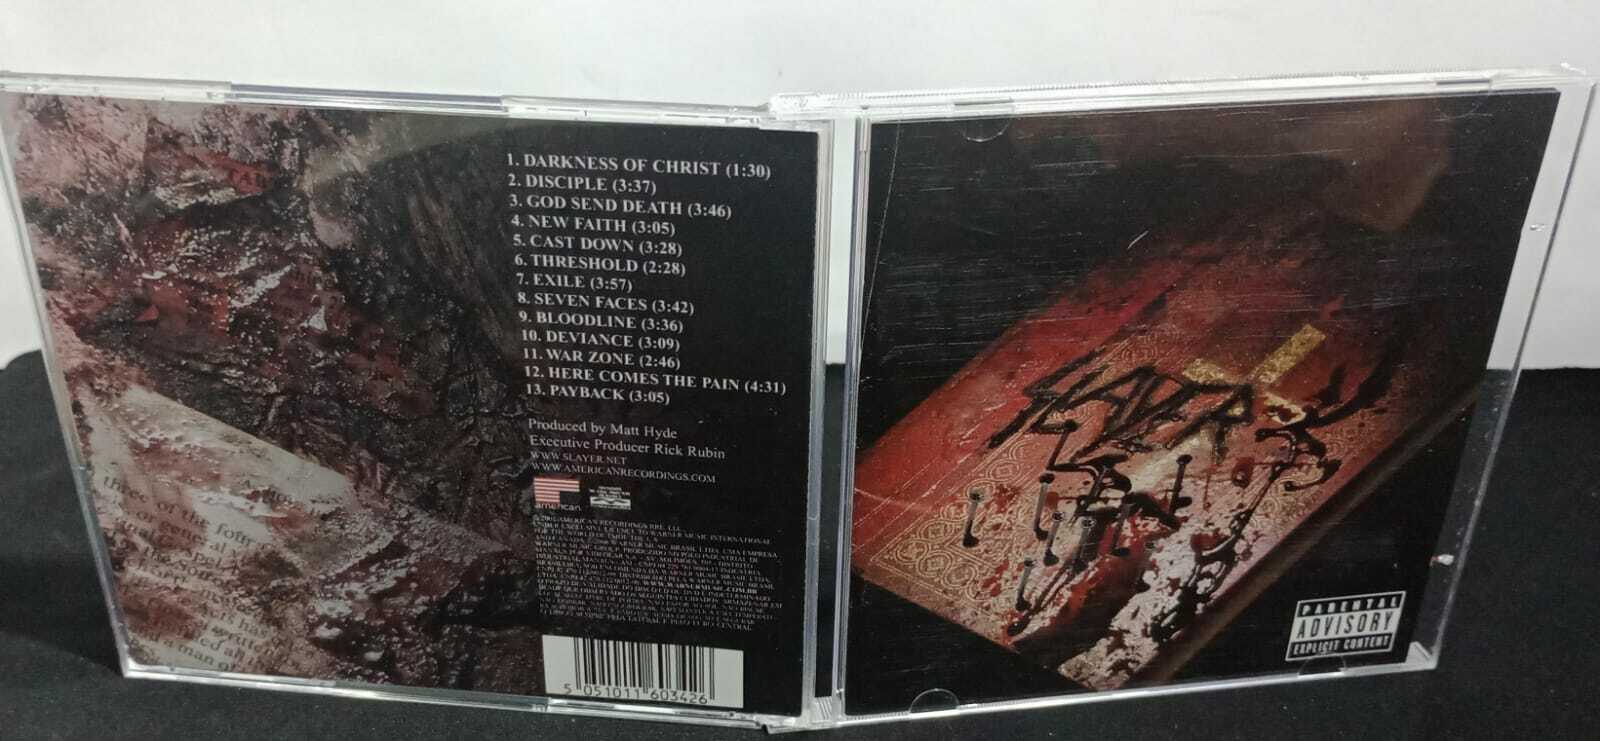 CD - Slayer - God Hates us All (Canada)